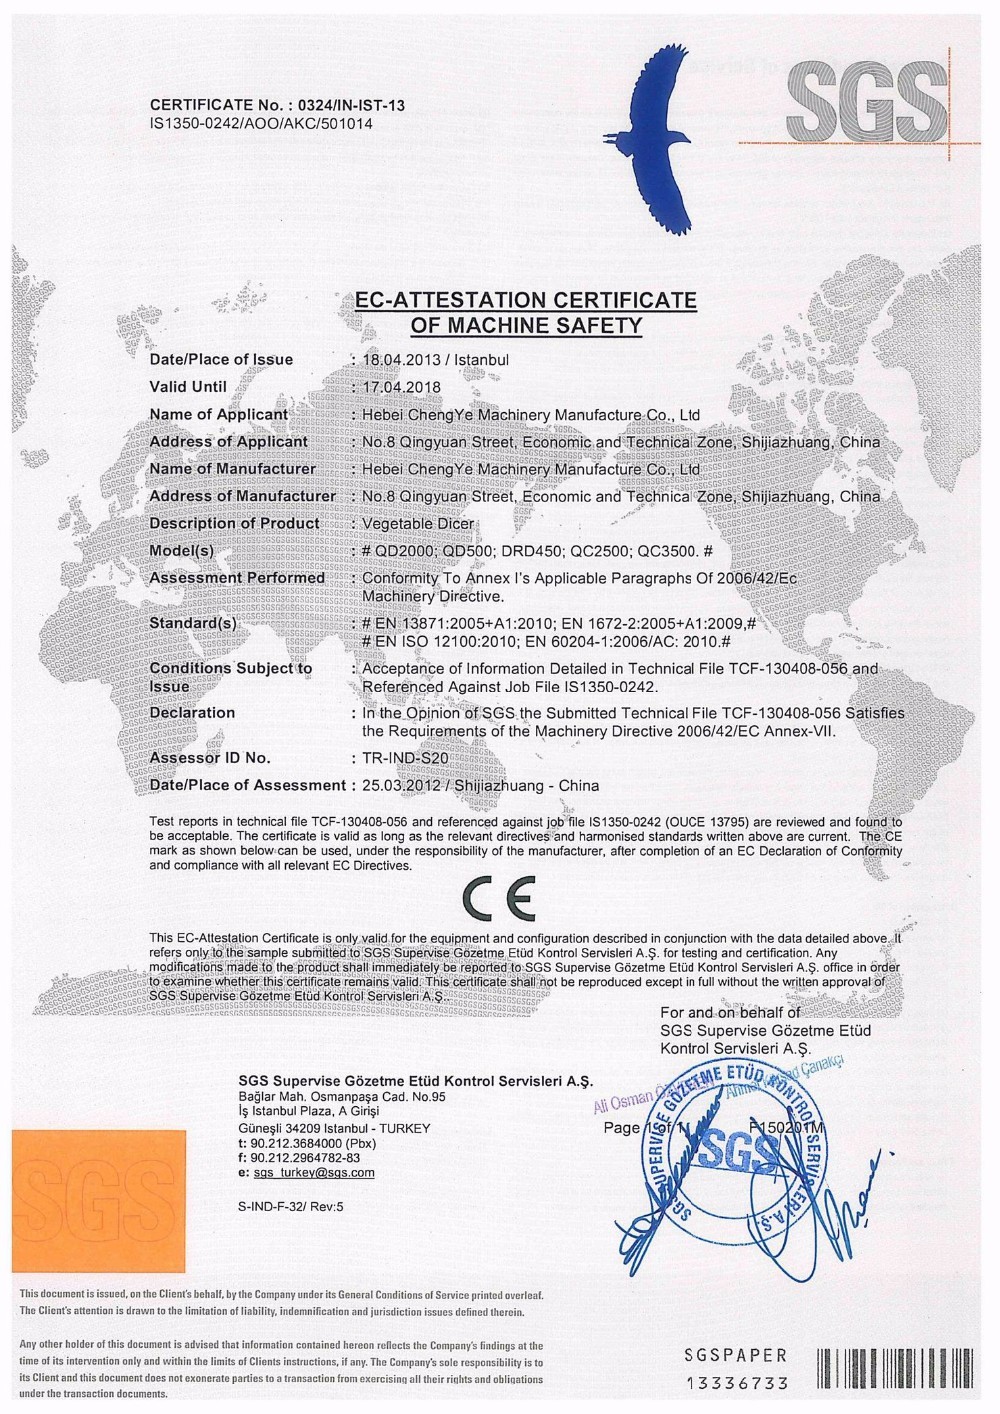 Hebei Chengye Intelligent Technology Co., Ltd. Certifications